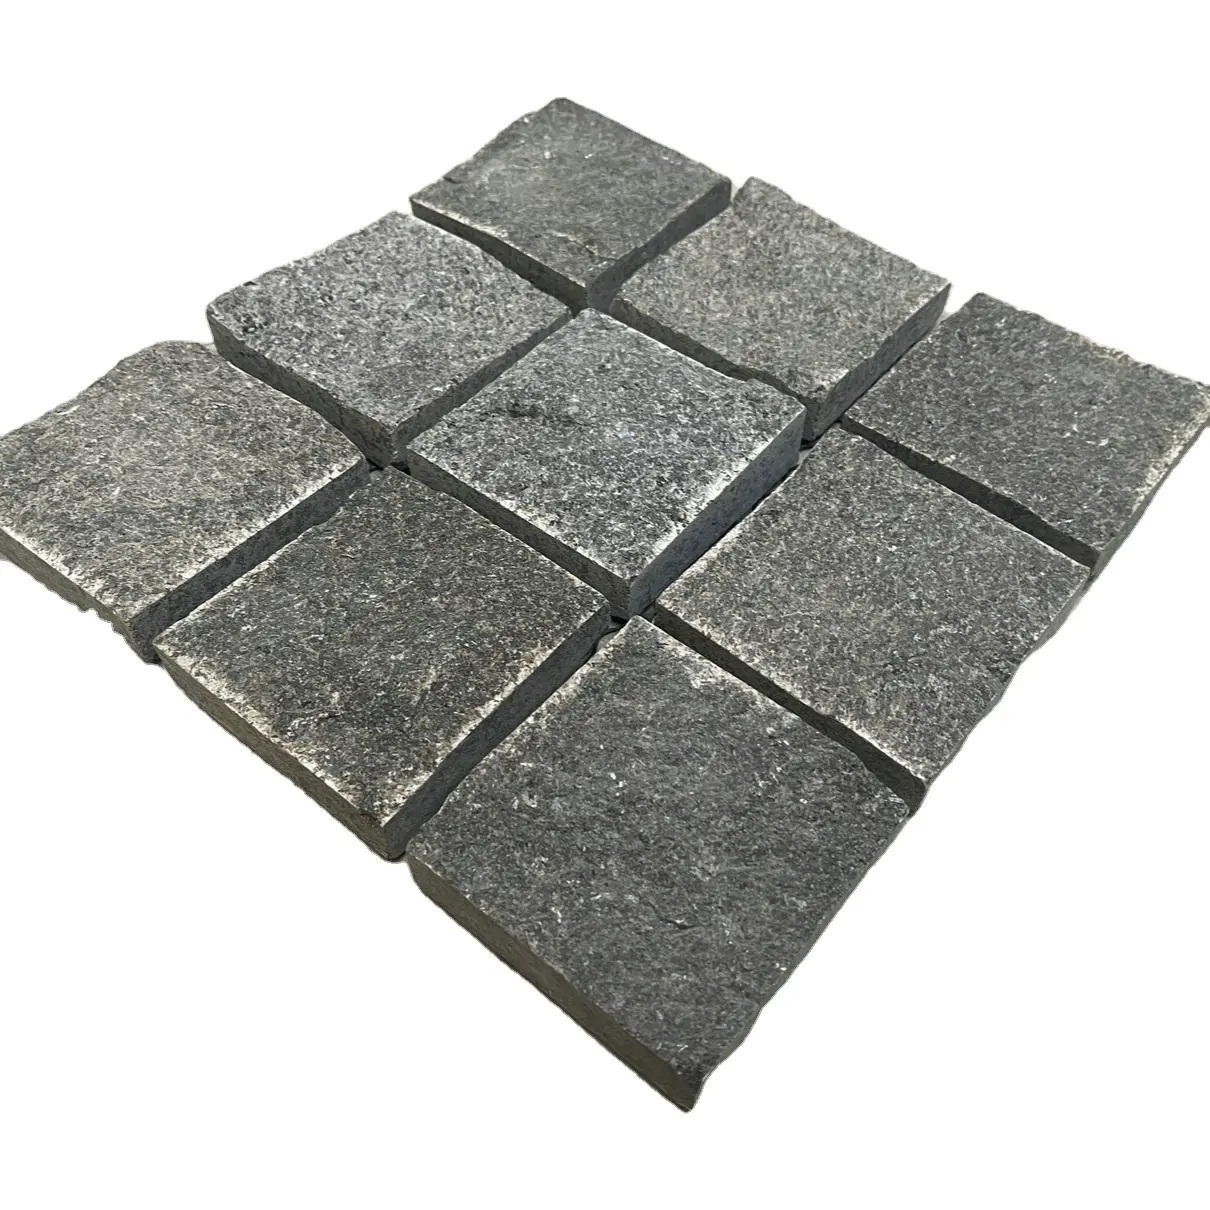 Azulejo de pavimentación de granito flameado pulido de basalto negro de malla de Piedra de adoquín más vendido para uso moderno al aire libre para pavimentación exterior